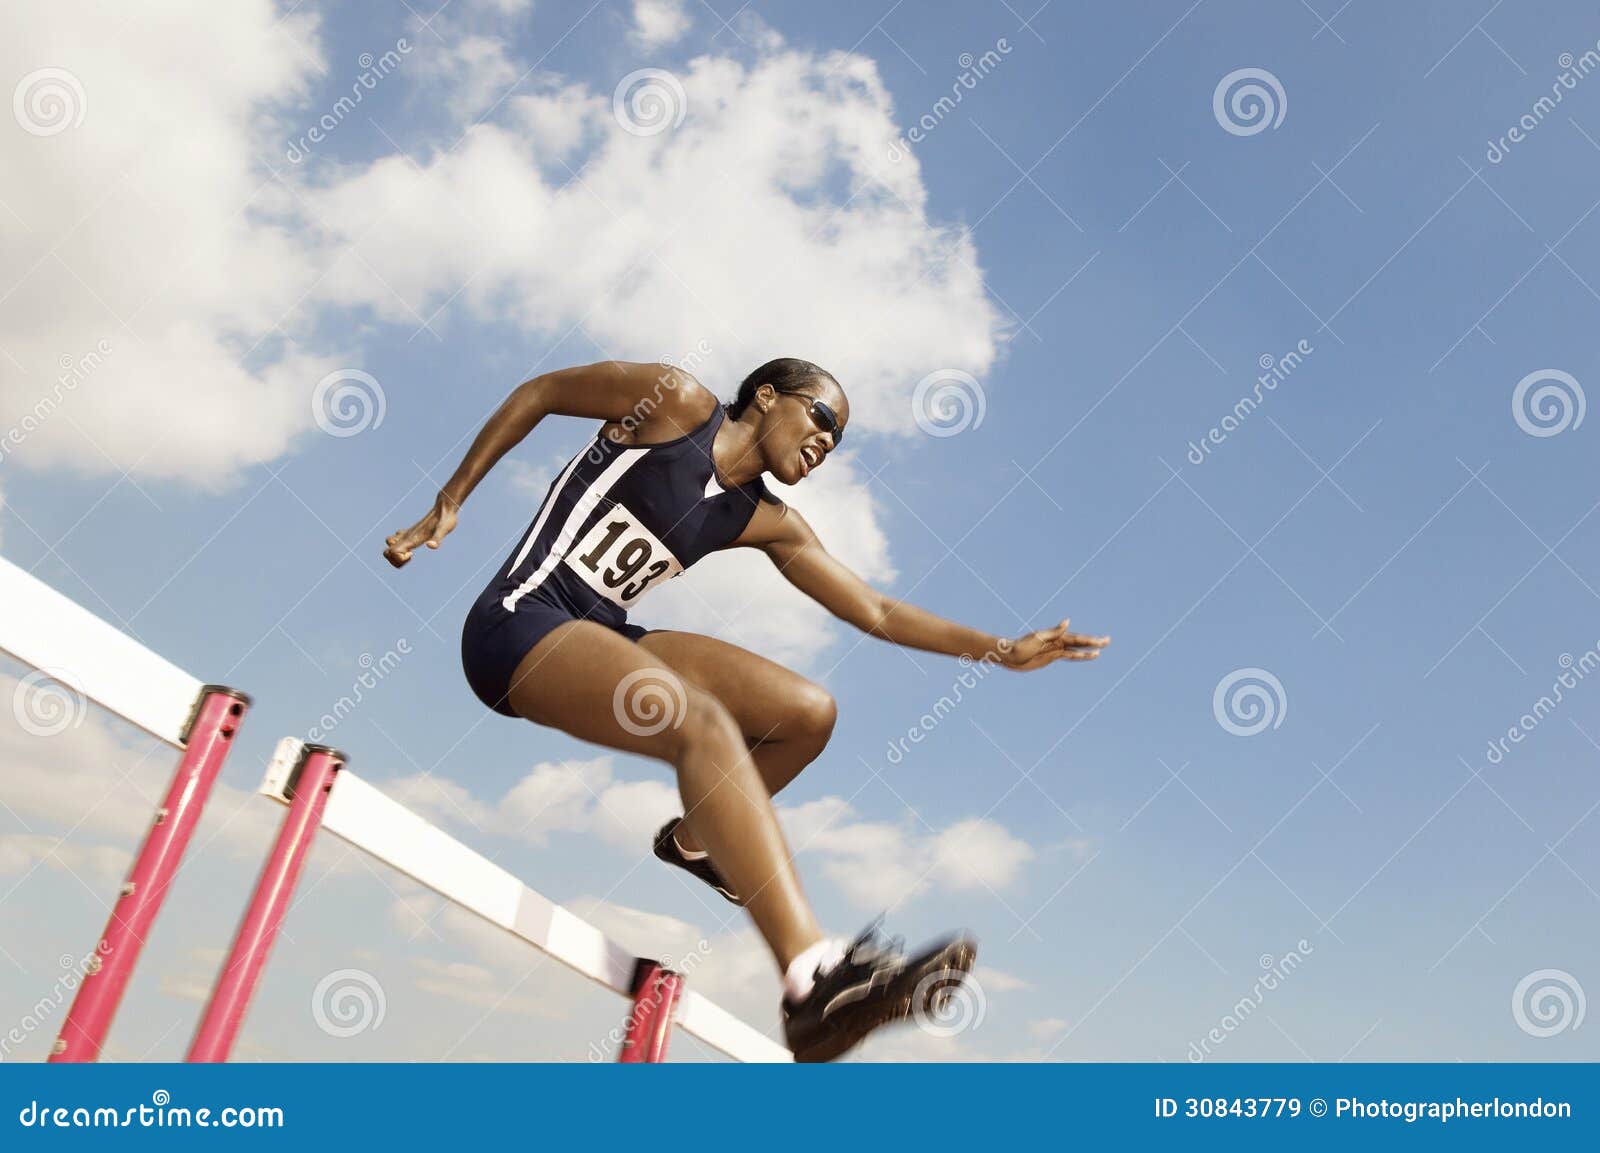 female athlete jumping hurdle